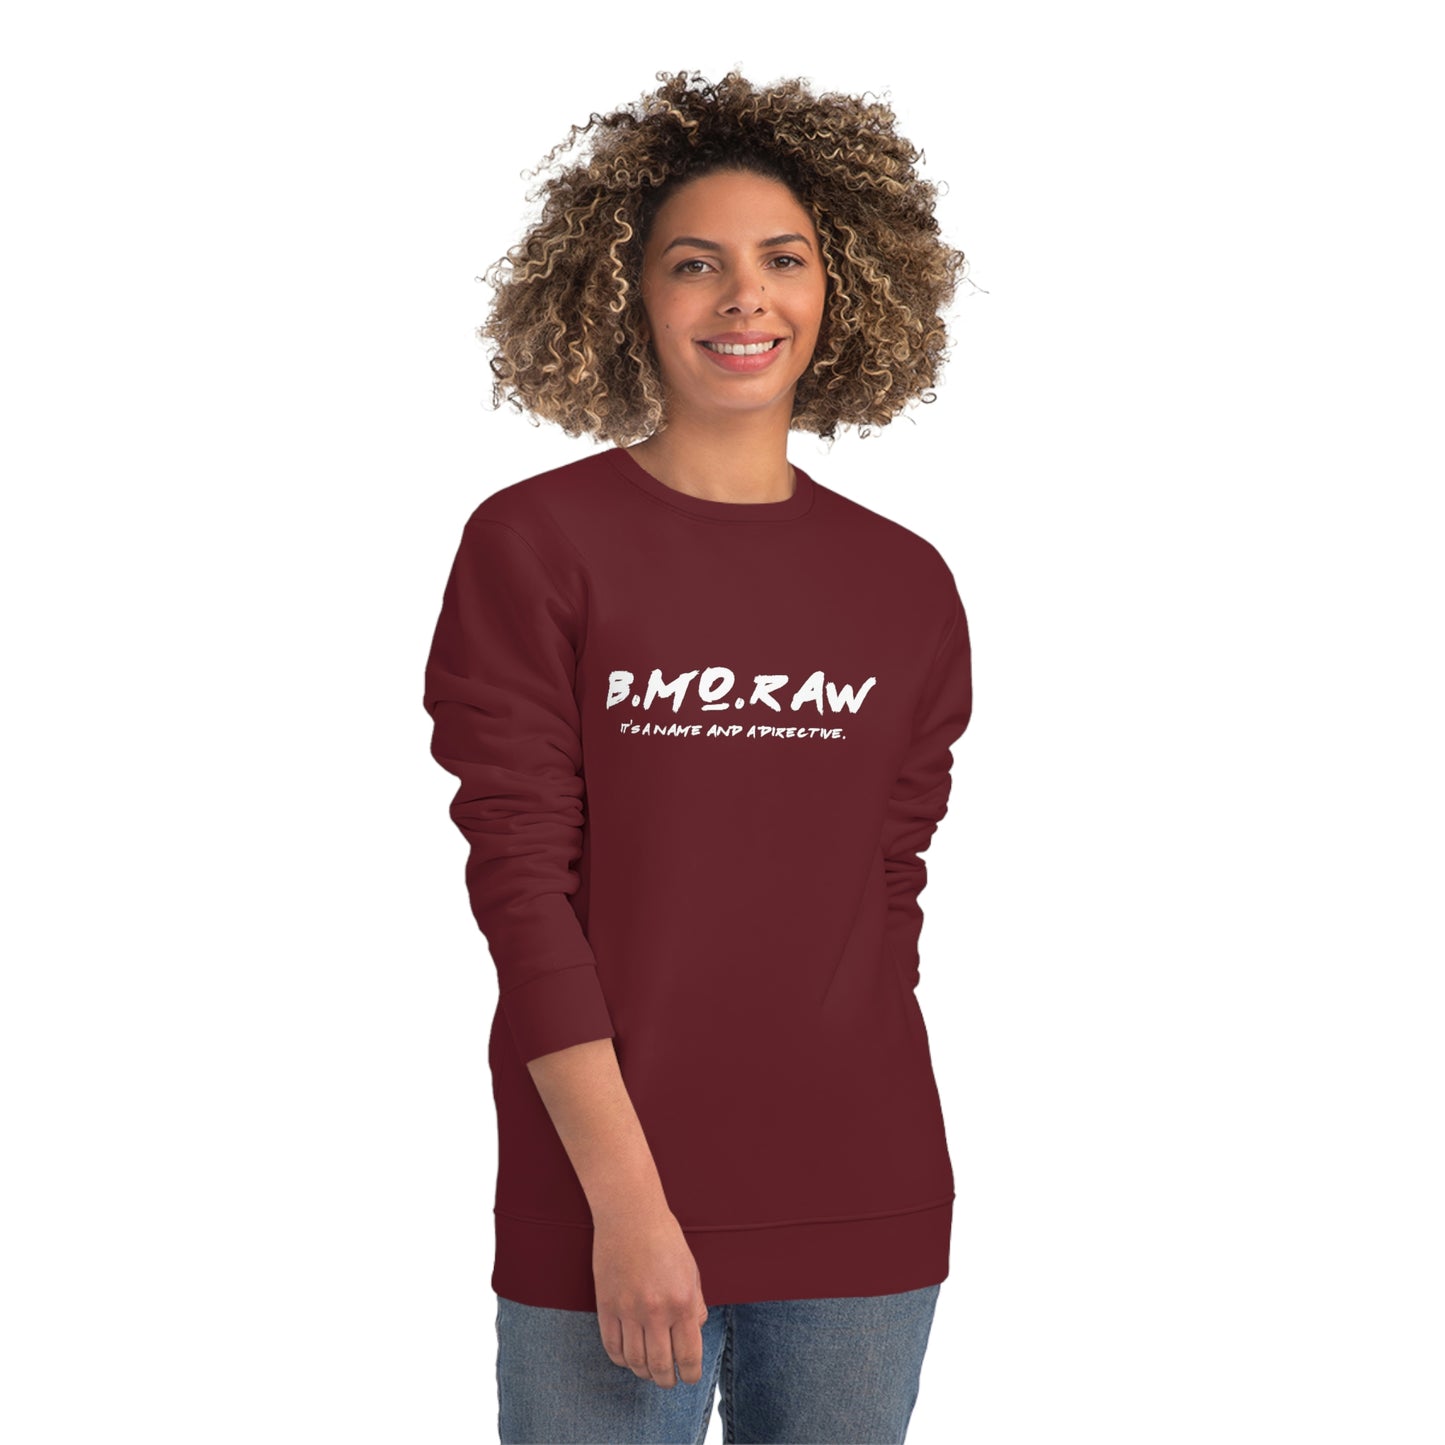 BMoRaw, A Raw-ism - Sweatshirt